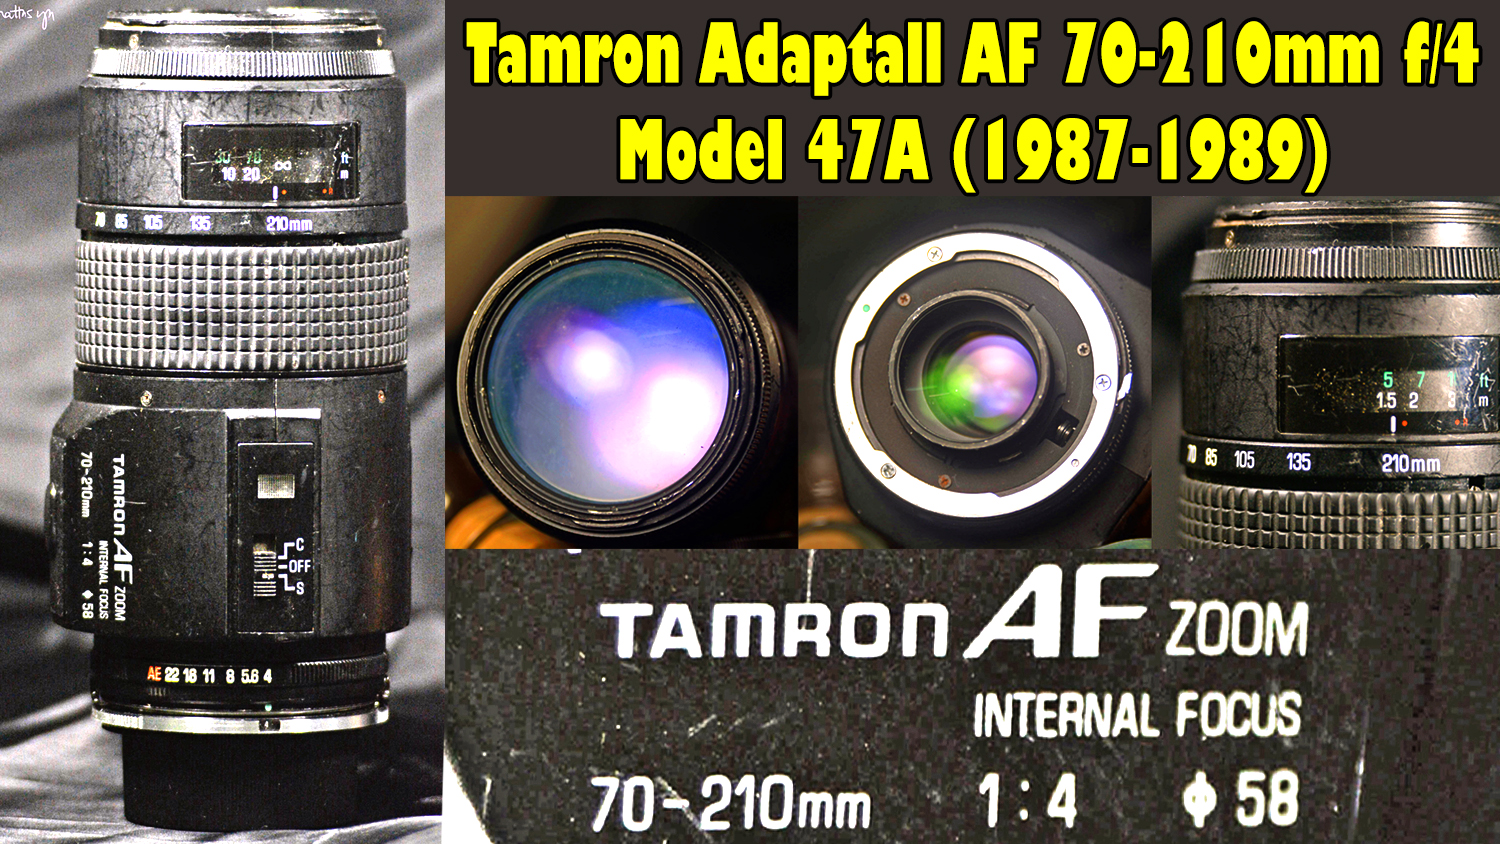 RARE LENS! Tamron Adaptall AF 70-210mm f/4 (Model 47A, 1987-1989)